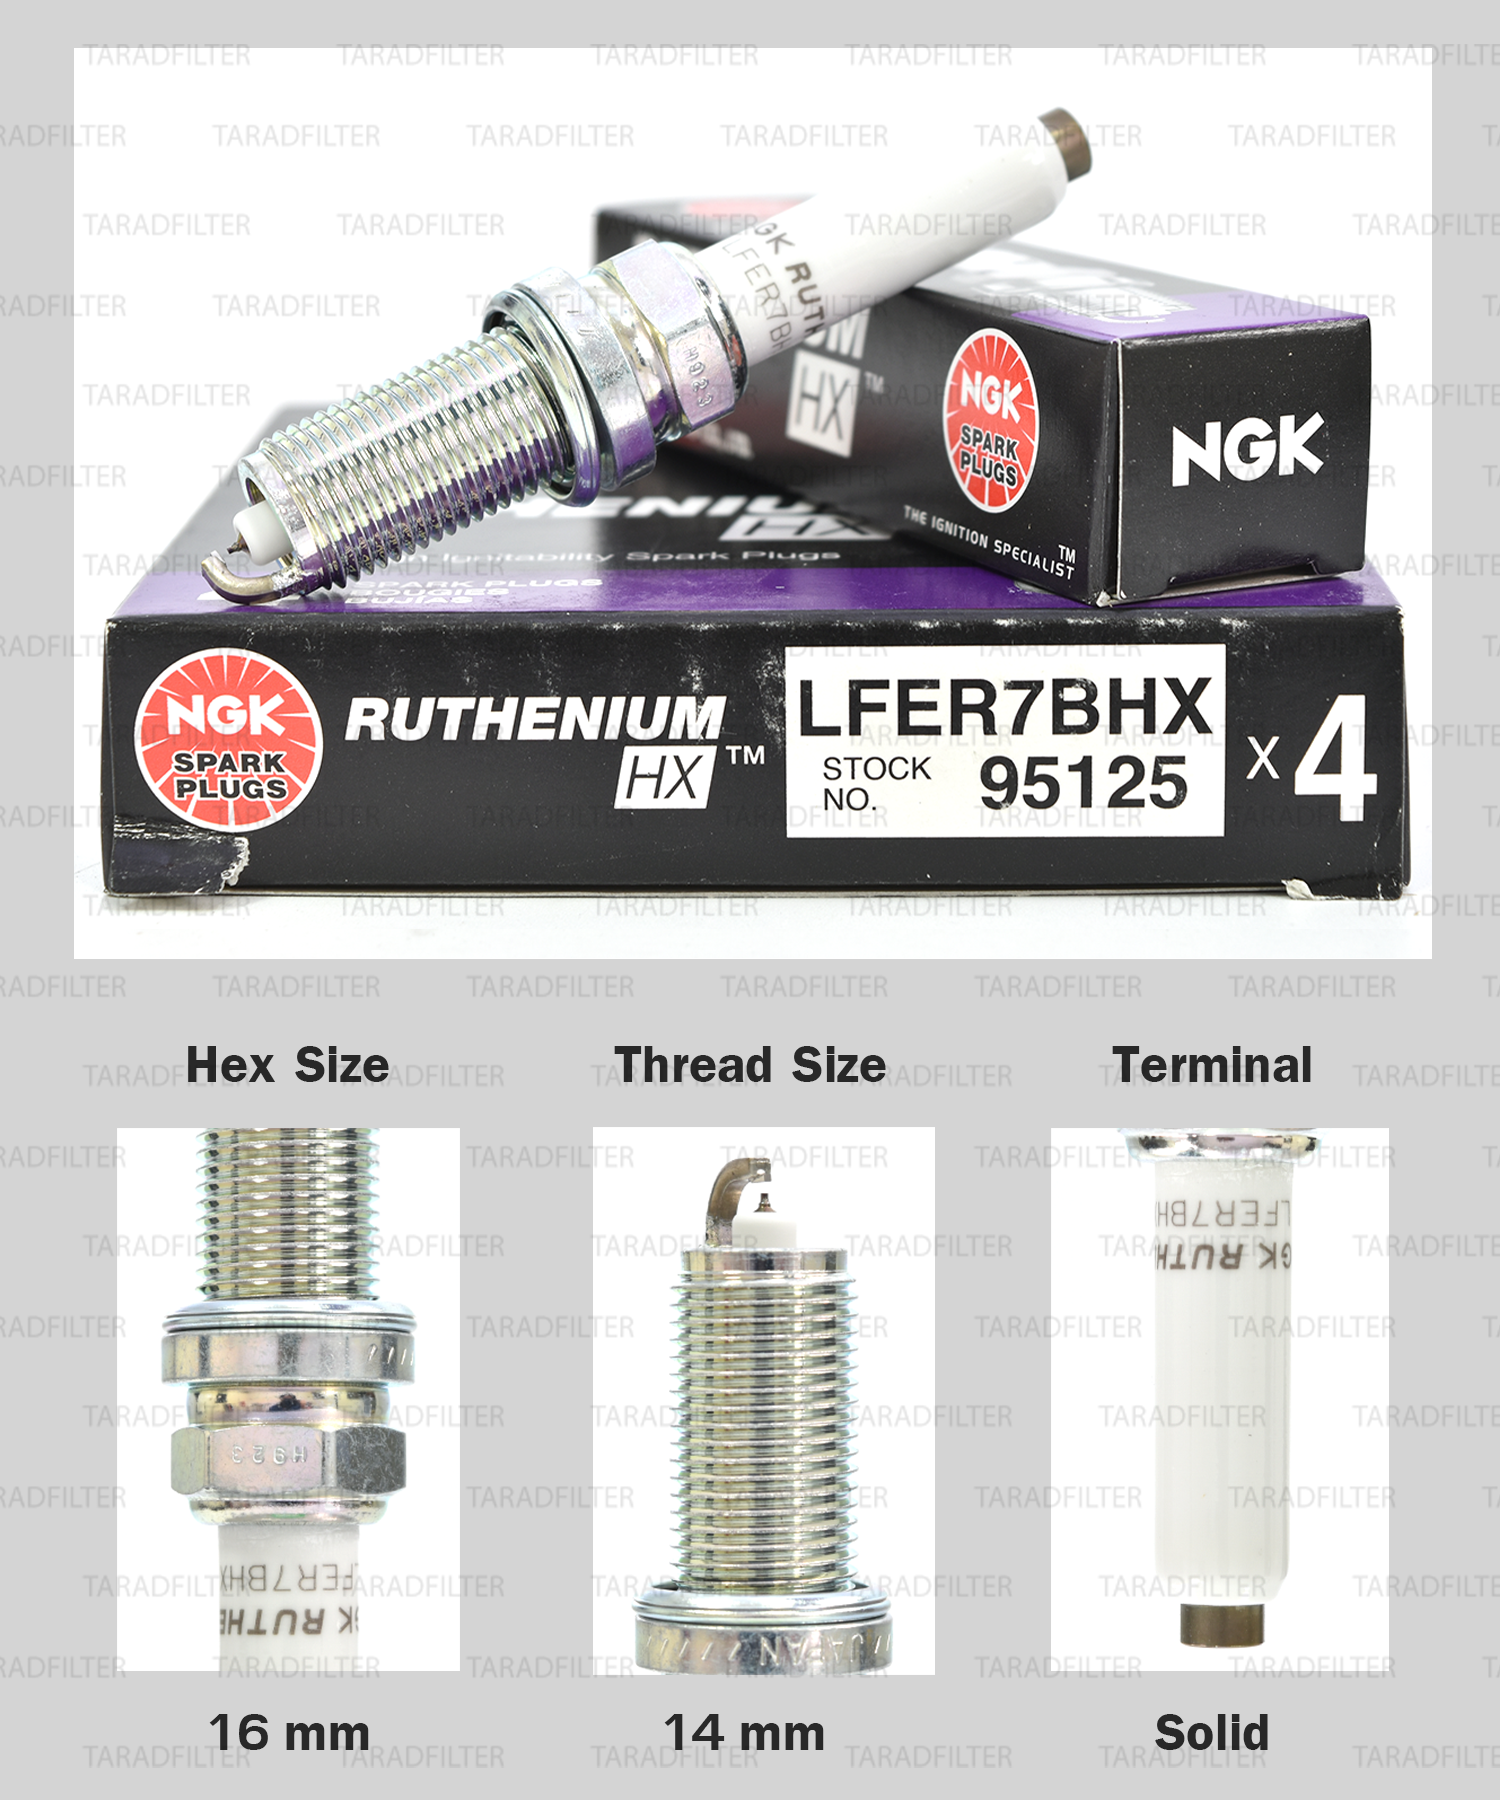 NGK หัวเทียน Ruthenium HX ขั้ว Ruthenium LFER7BHX ใช้สำหรับรถ VOLKSWAGEN BEETLE / AUDI A3 , A4 , A6 - Made in Japan